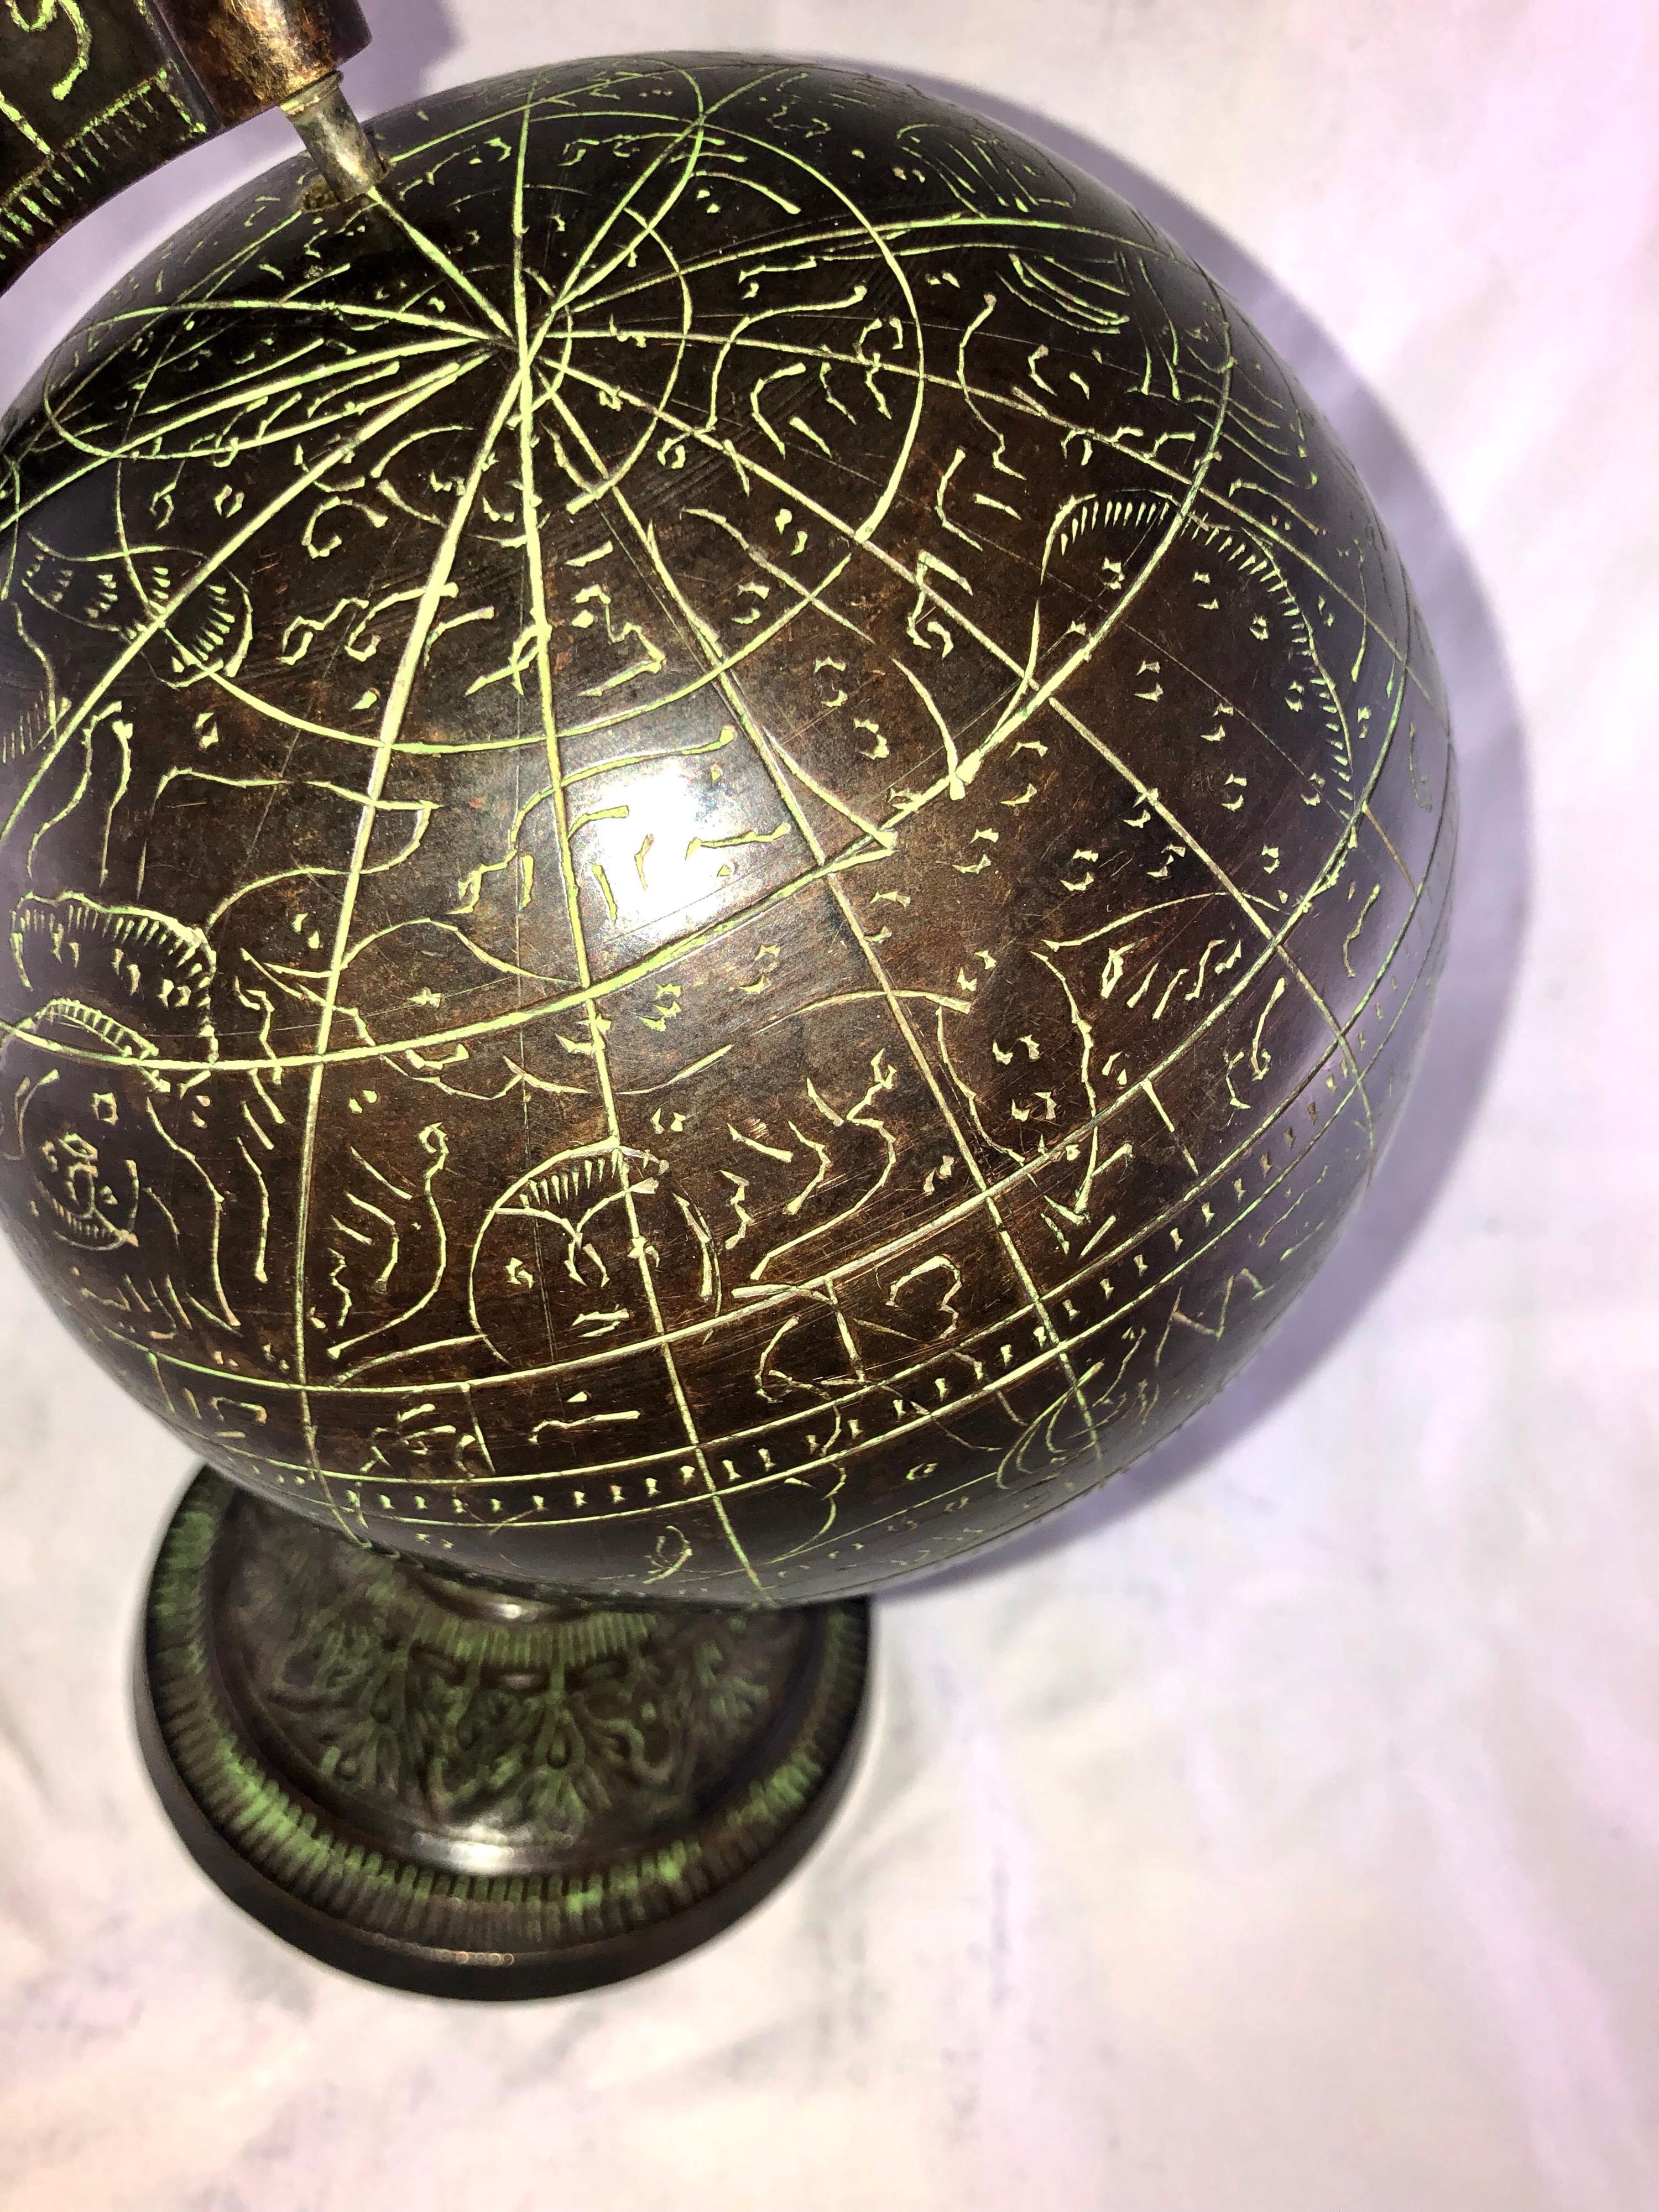 astrolabe globe